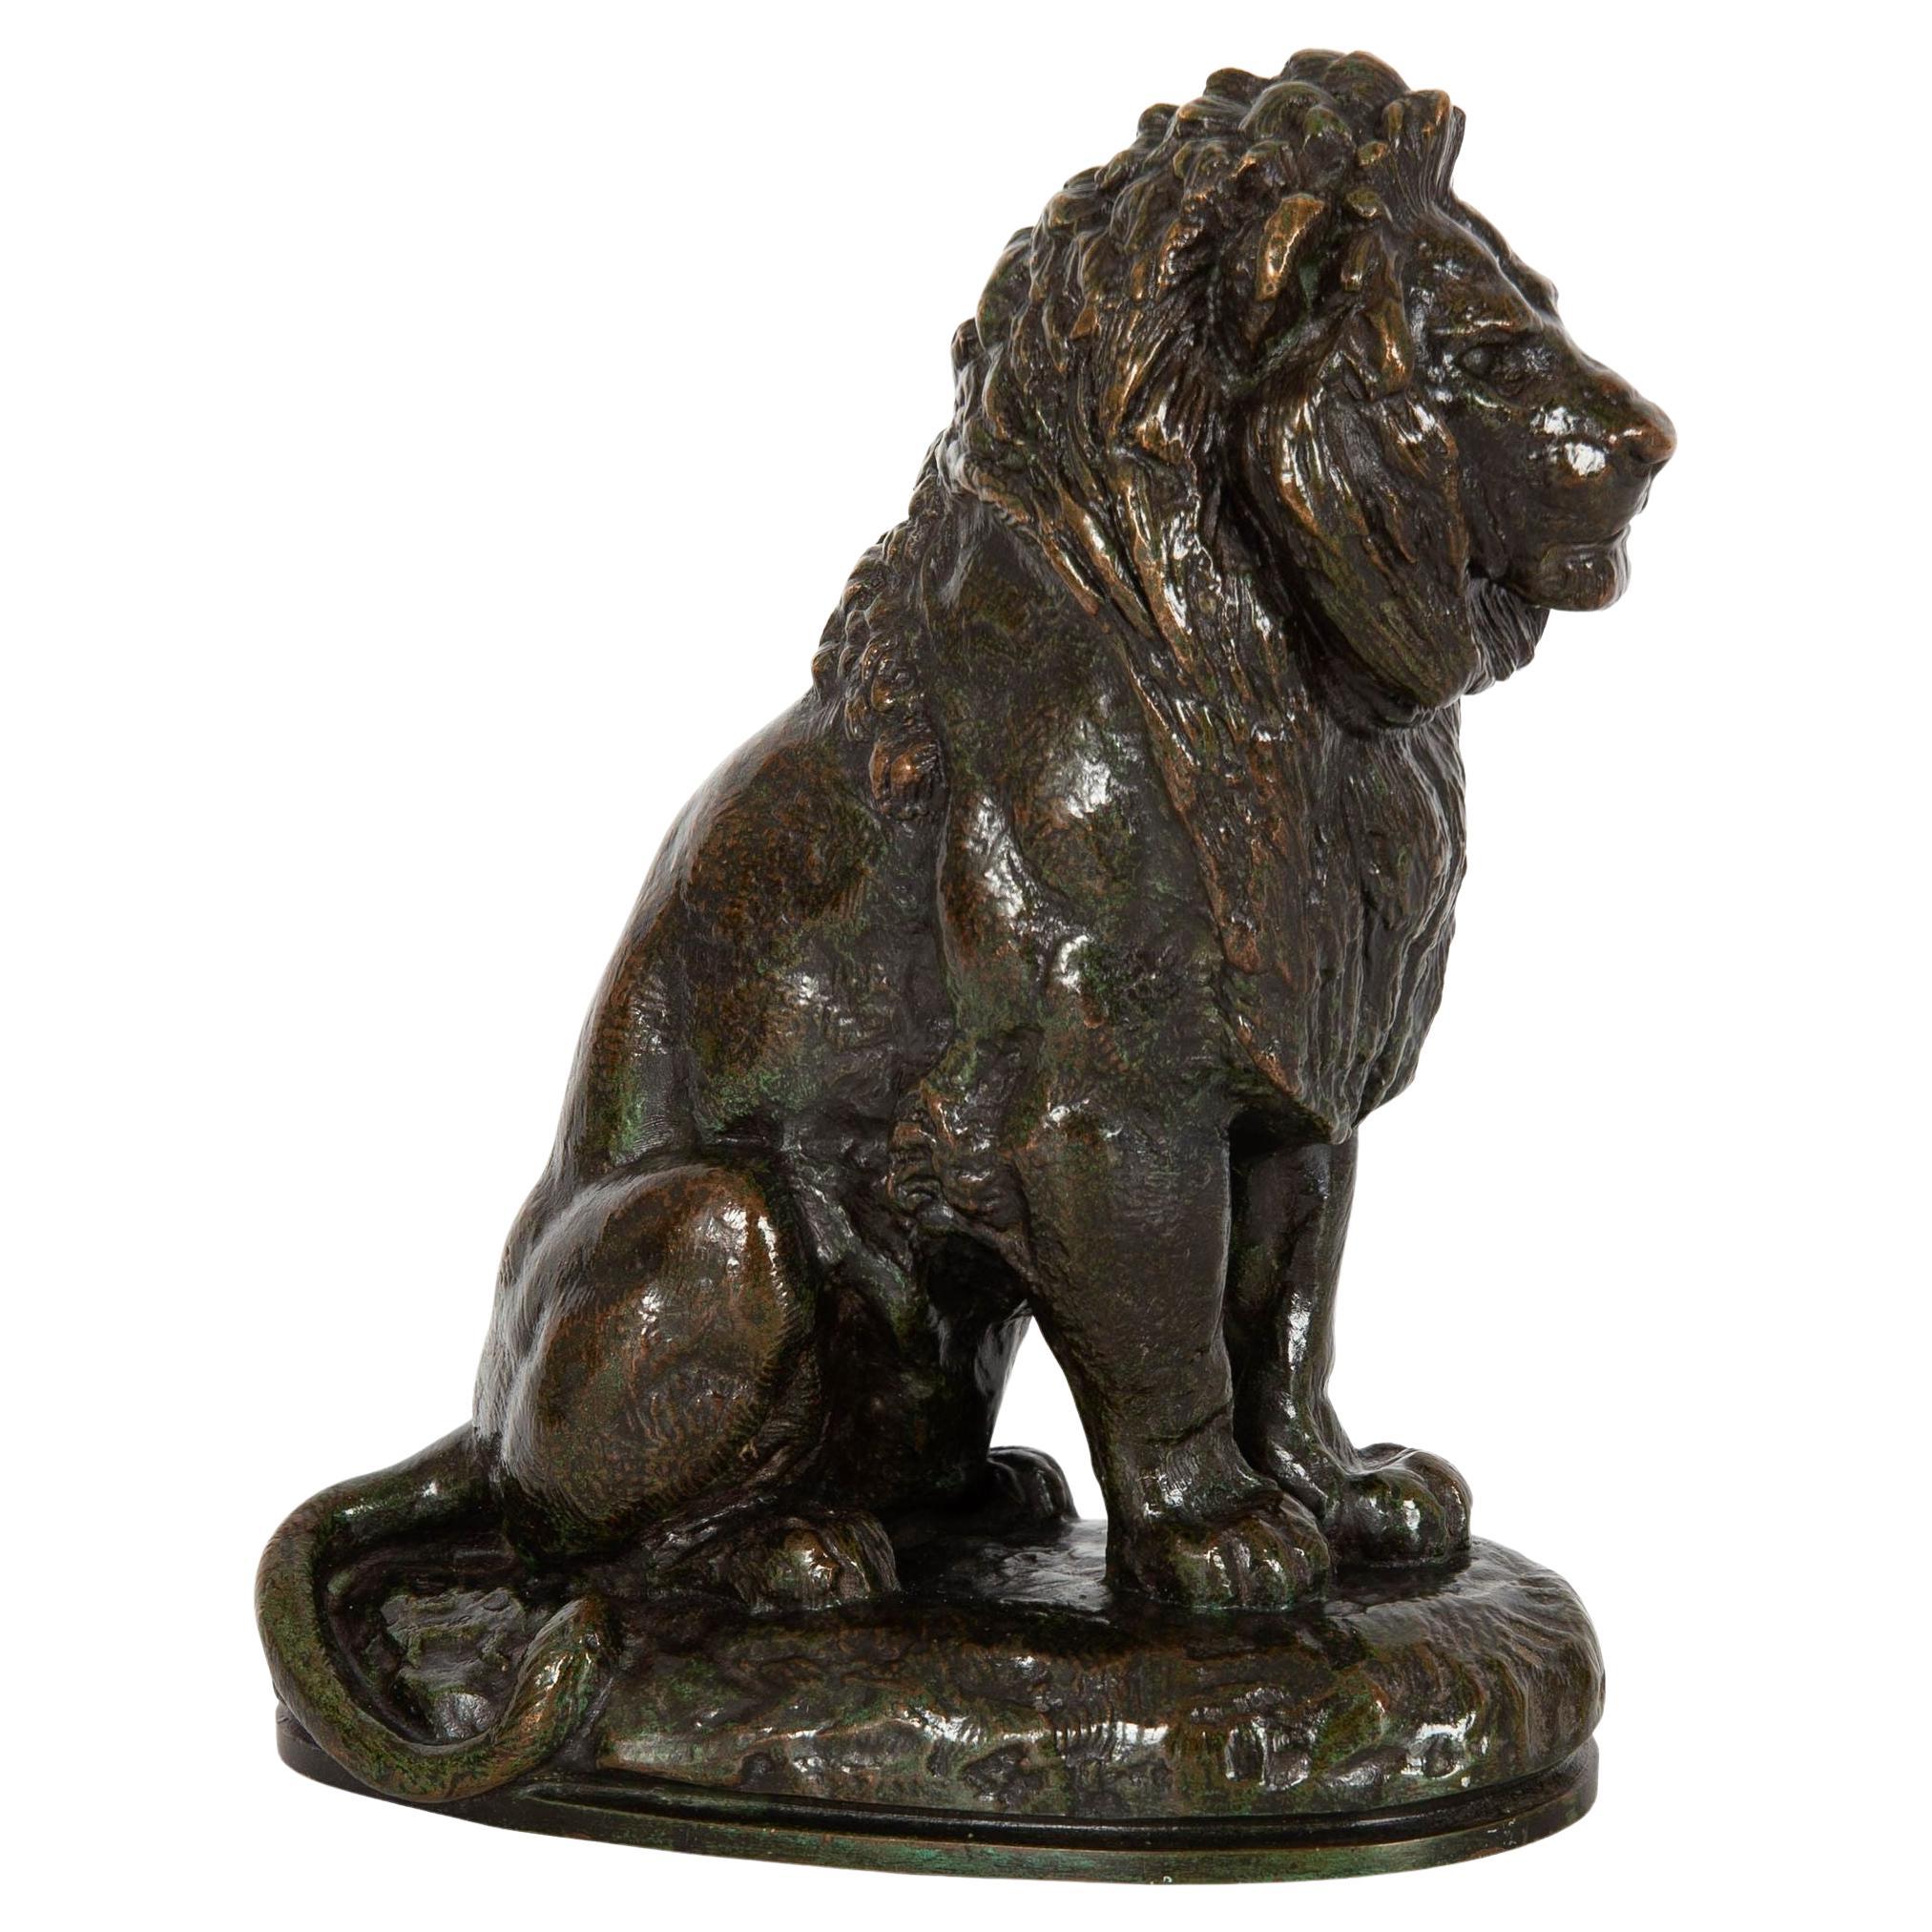 Bronze Sculpture “Lion Assis No. 2”, Antoine Louis Barye, circa 1880